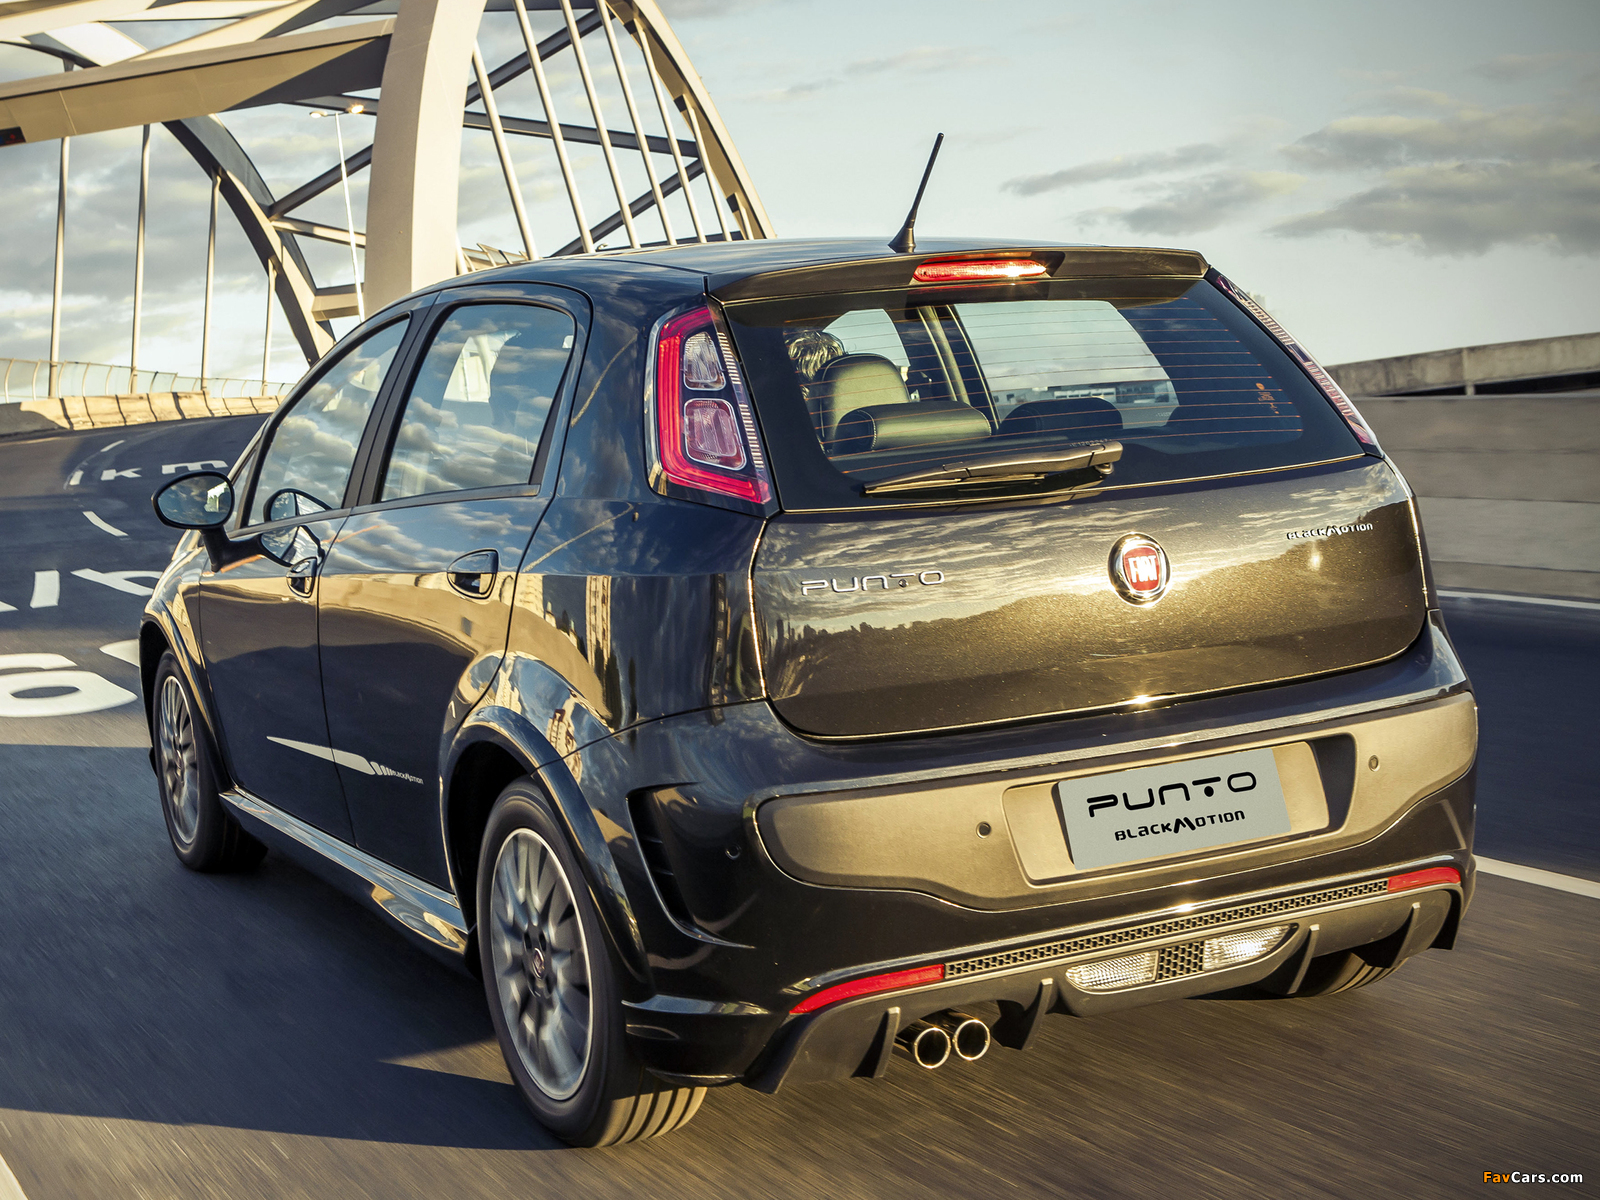 Fiat Punto BlackMotion (310) 2013 images (1600 x 1200)